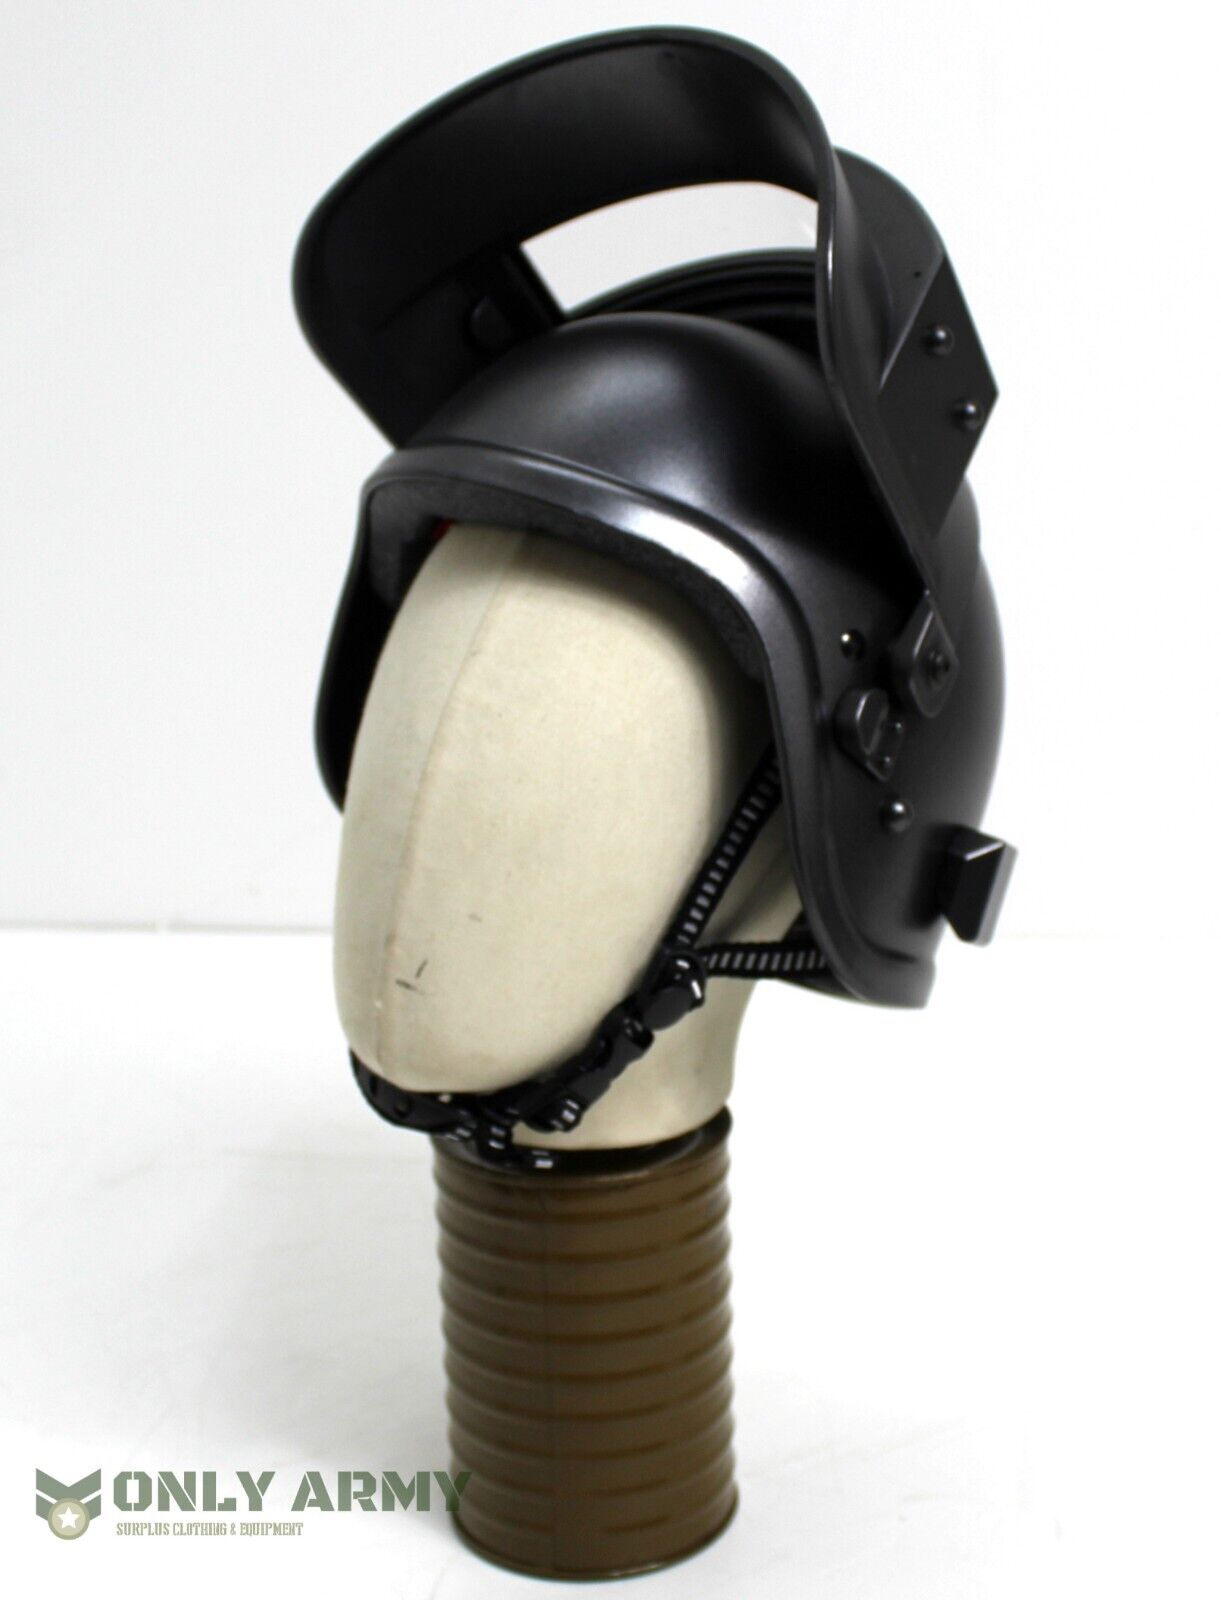 Repro Russian Army K6 Helmet K6-3 Replica Plastic Bomb Disposal Special Forces